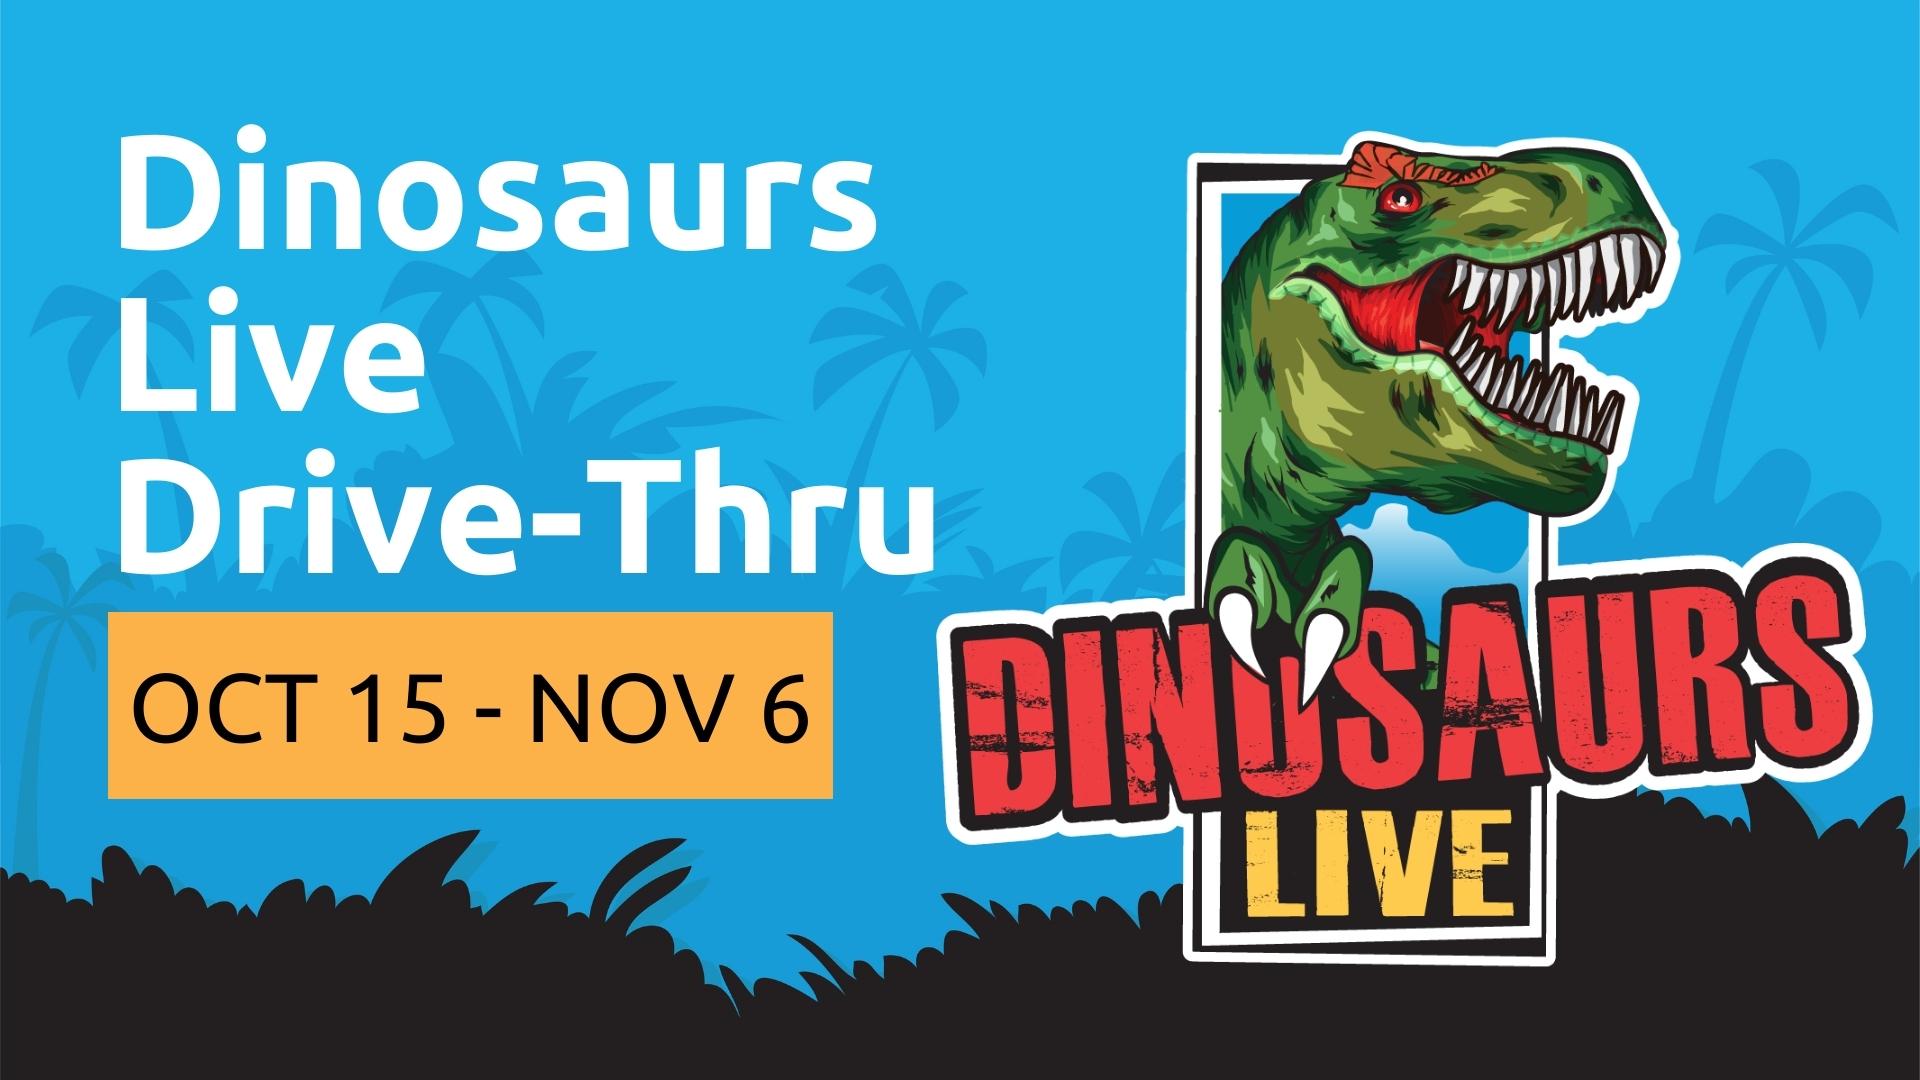 safari-niagara-dinosaurs-live-discount-code-myniagaraonline